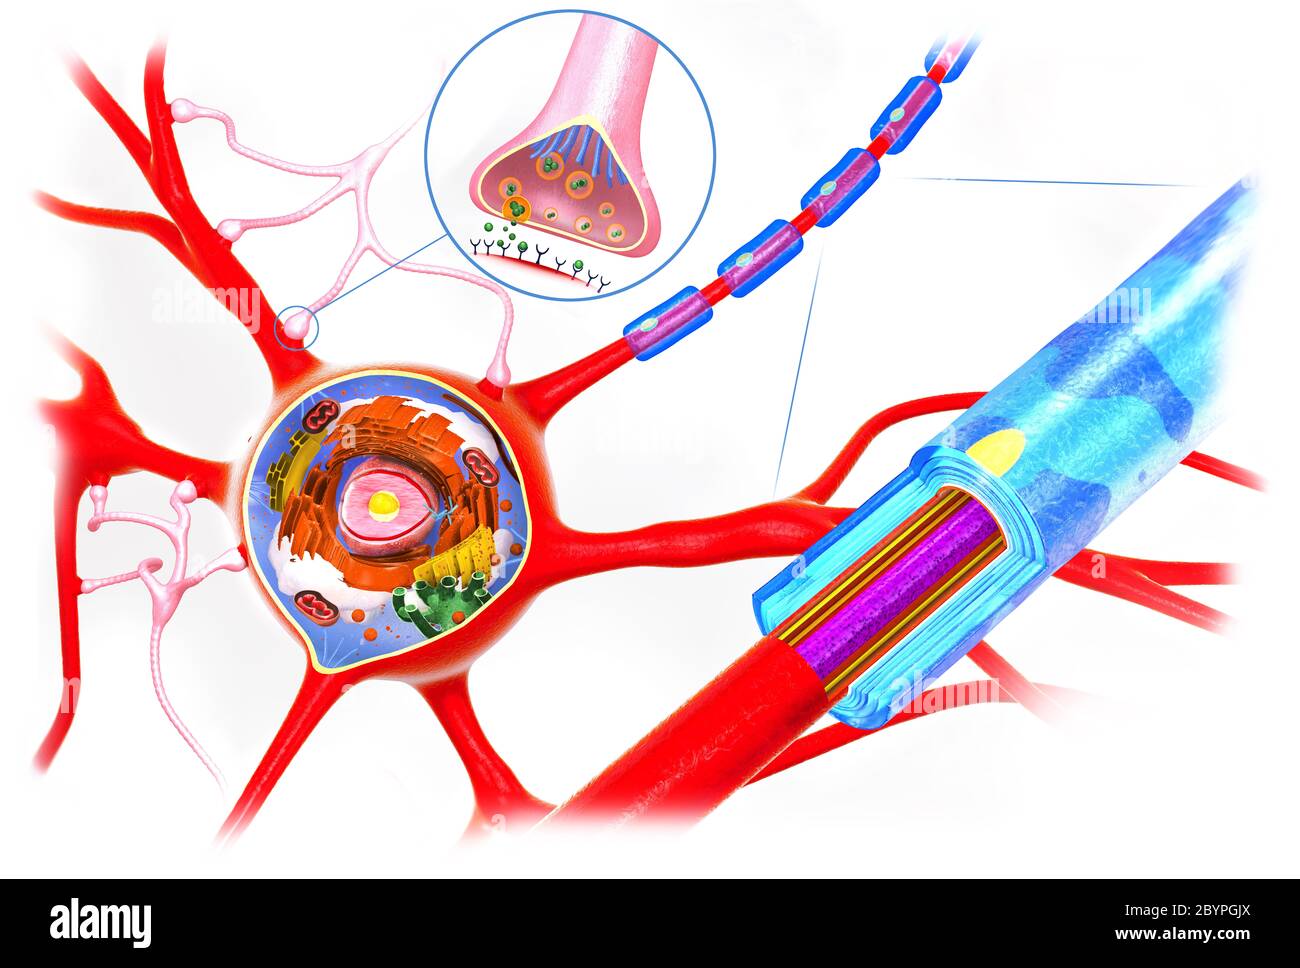 Querschnitt eines Neurons, Funktion und Zellbildung - 3d-Illustration Stockfoto